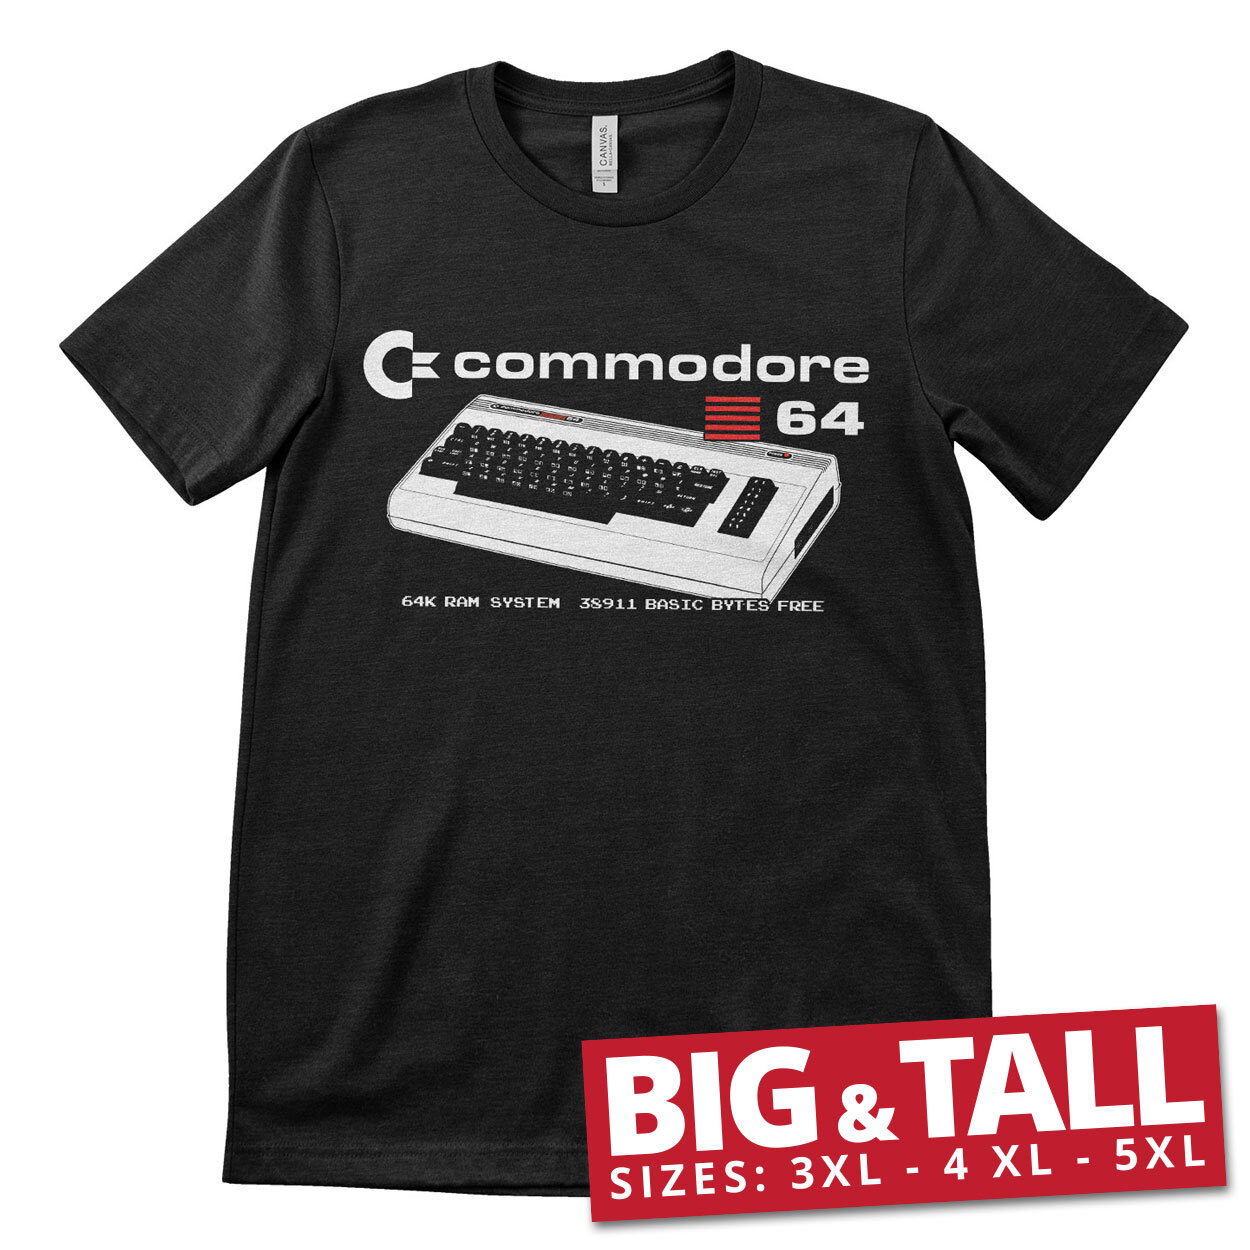 Commodore 64K RAM Big & Tall T-Shirt